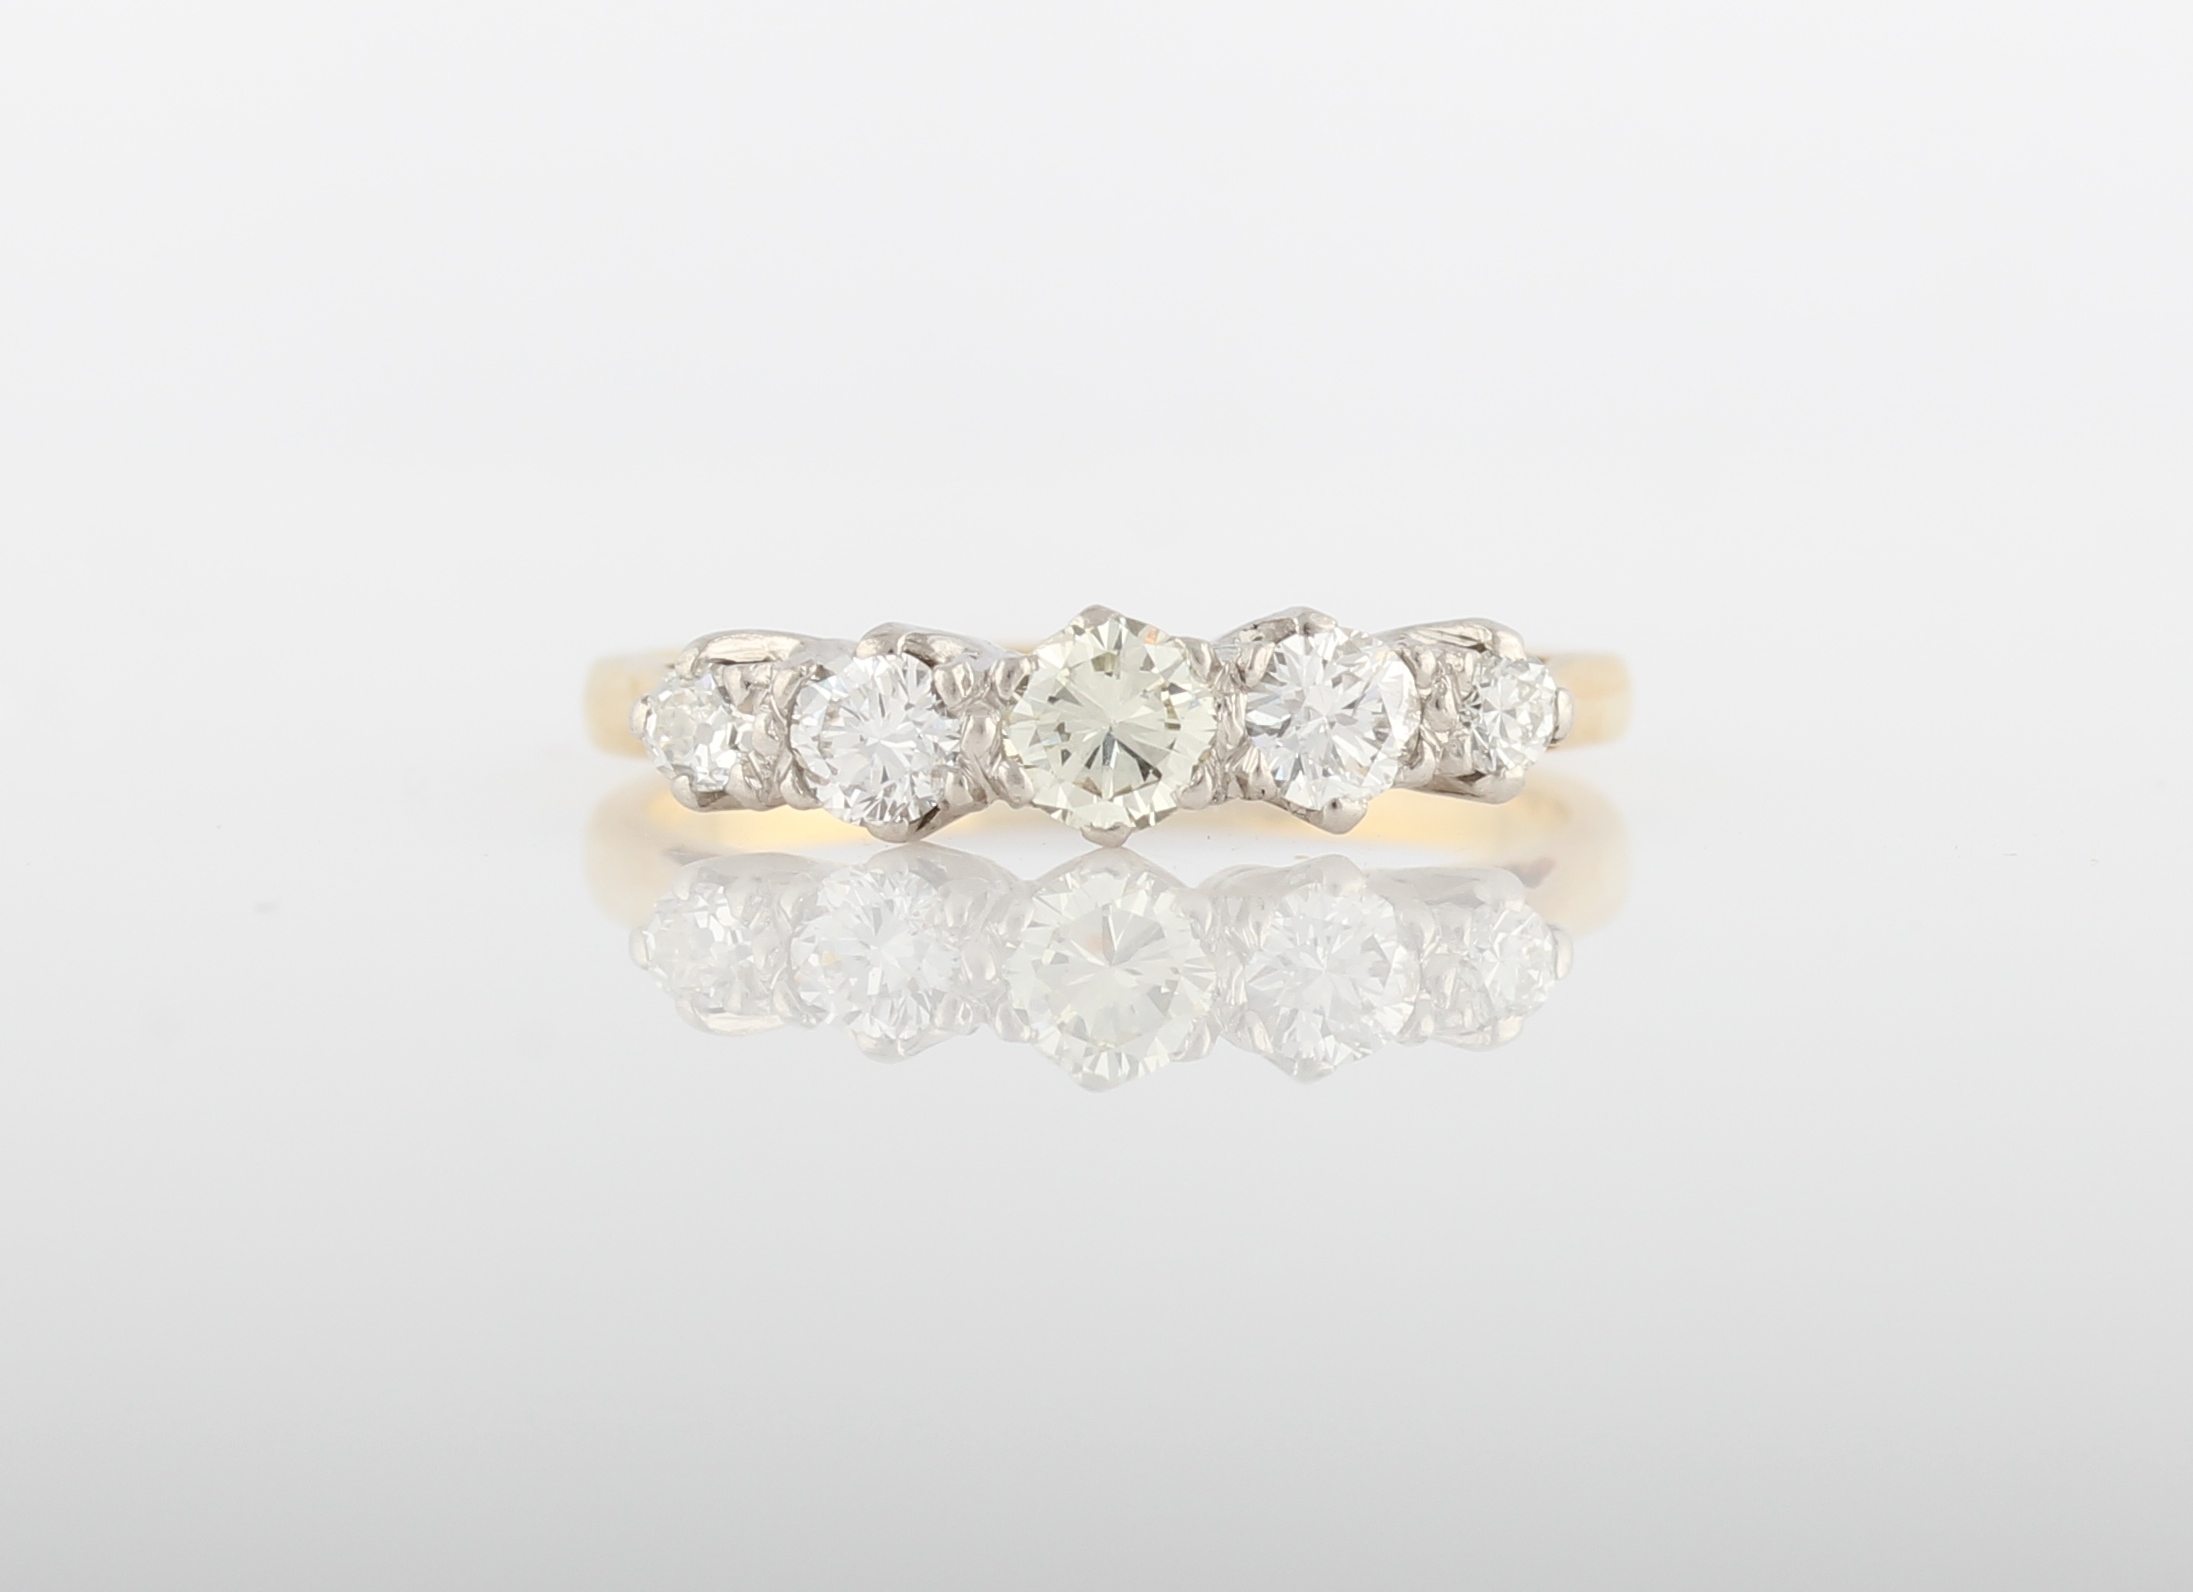 A five stone diamond ring, set with five graduated round brilliant cut diamonds, total diamond